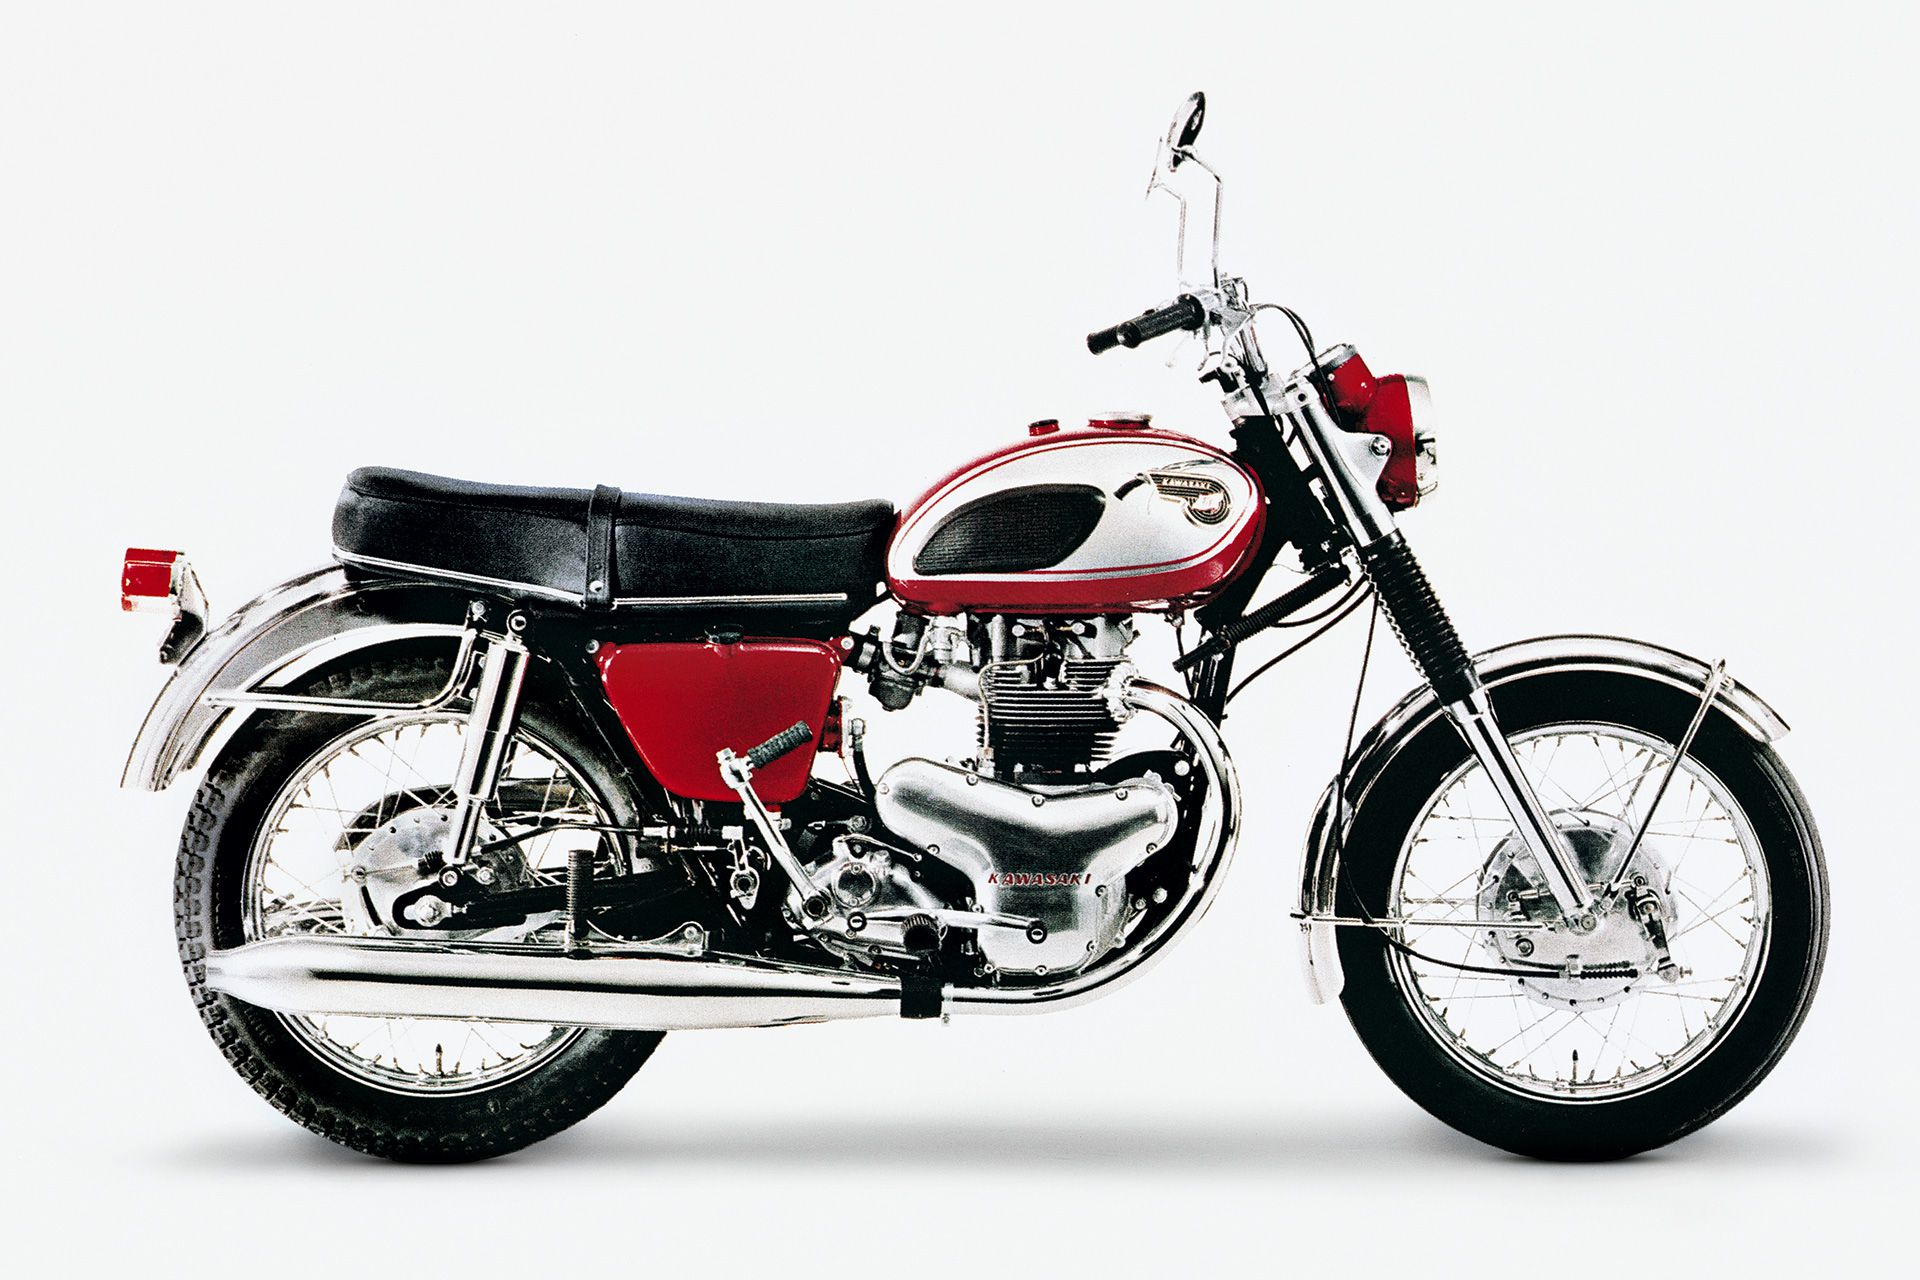 Kawasaki W800 Final Edition, Farewell to a Classic | Cycle World